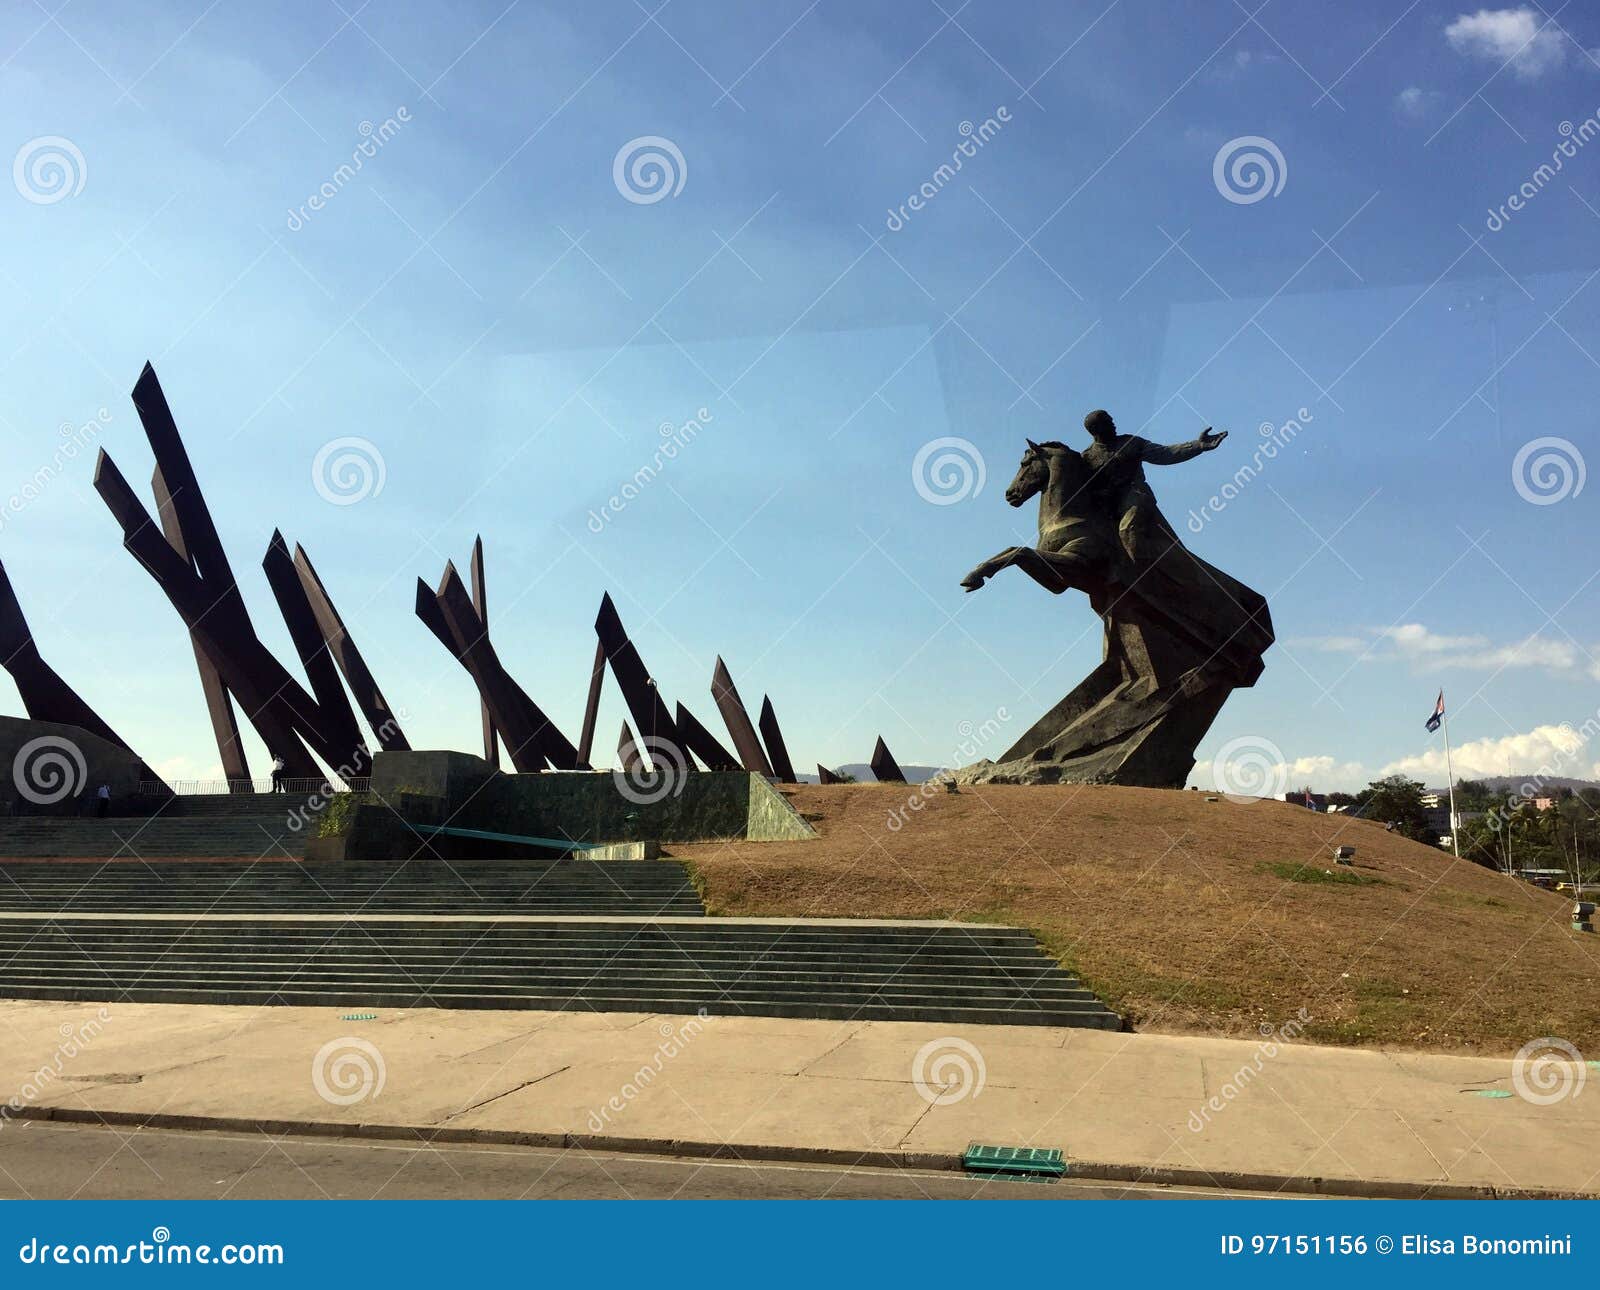 monument to macedo in santiago de cuba